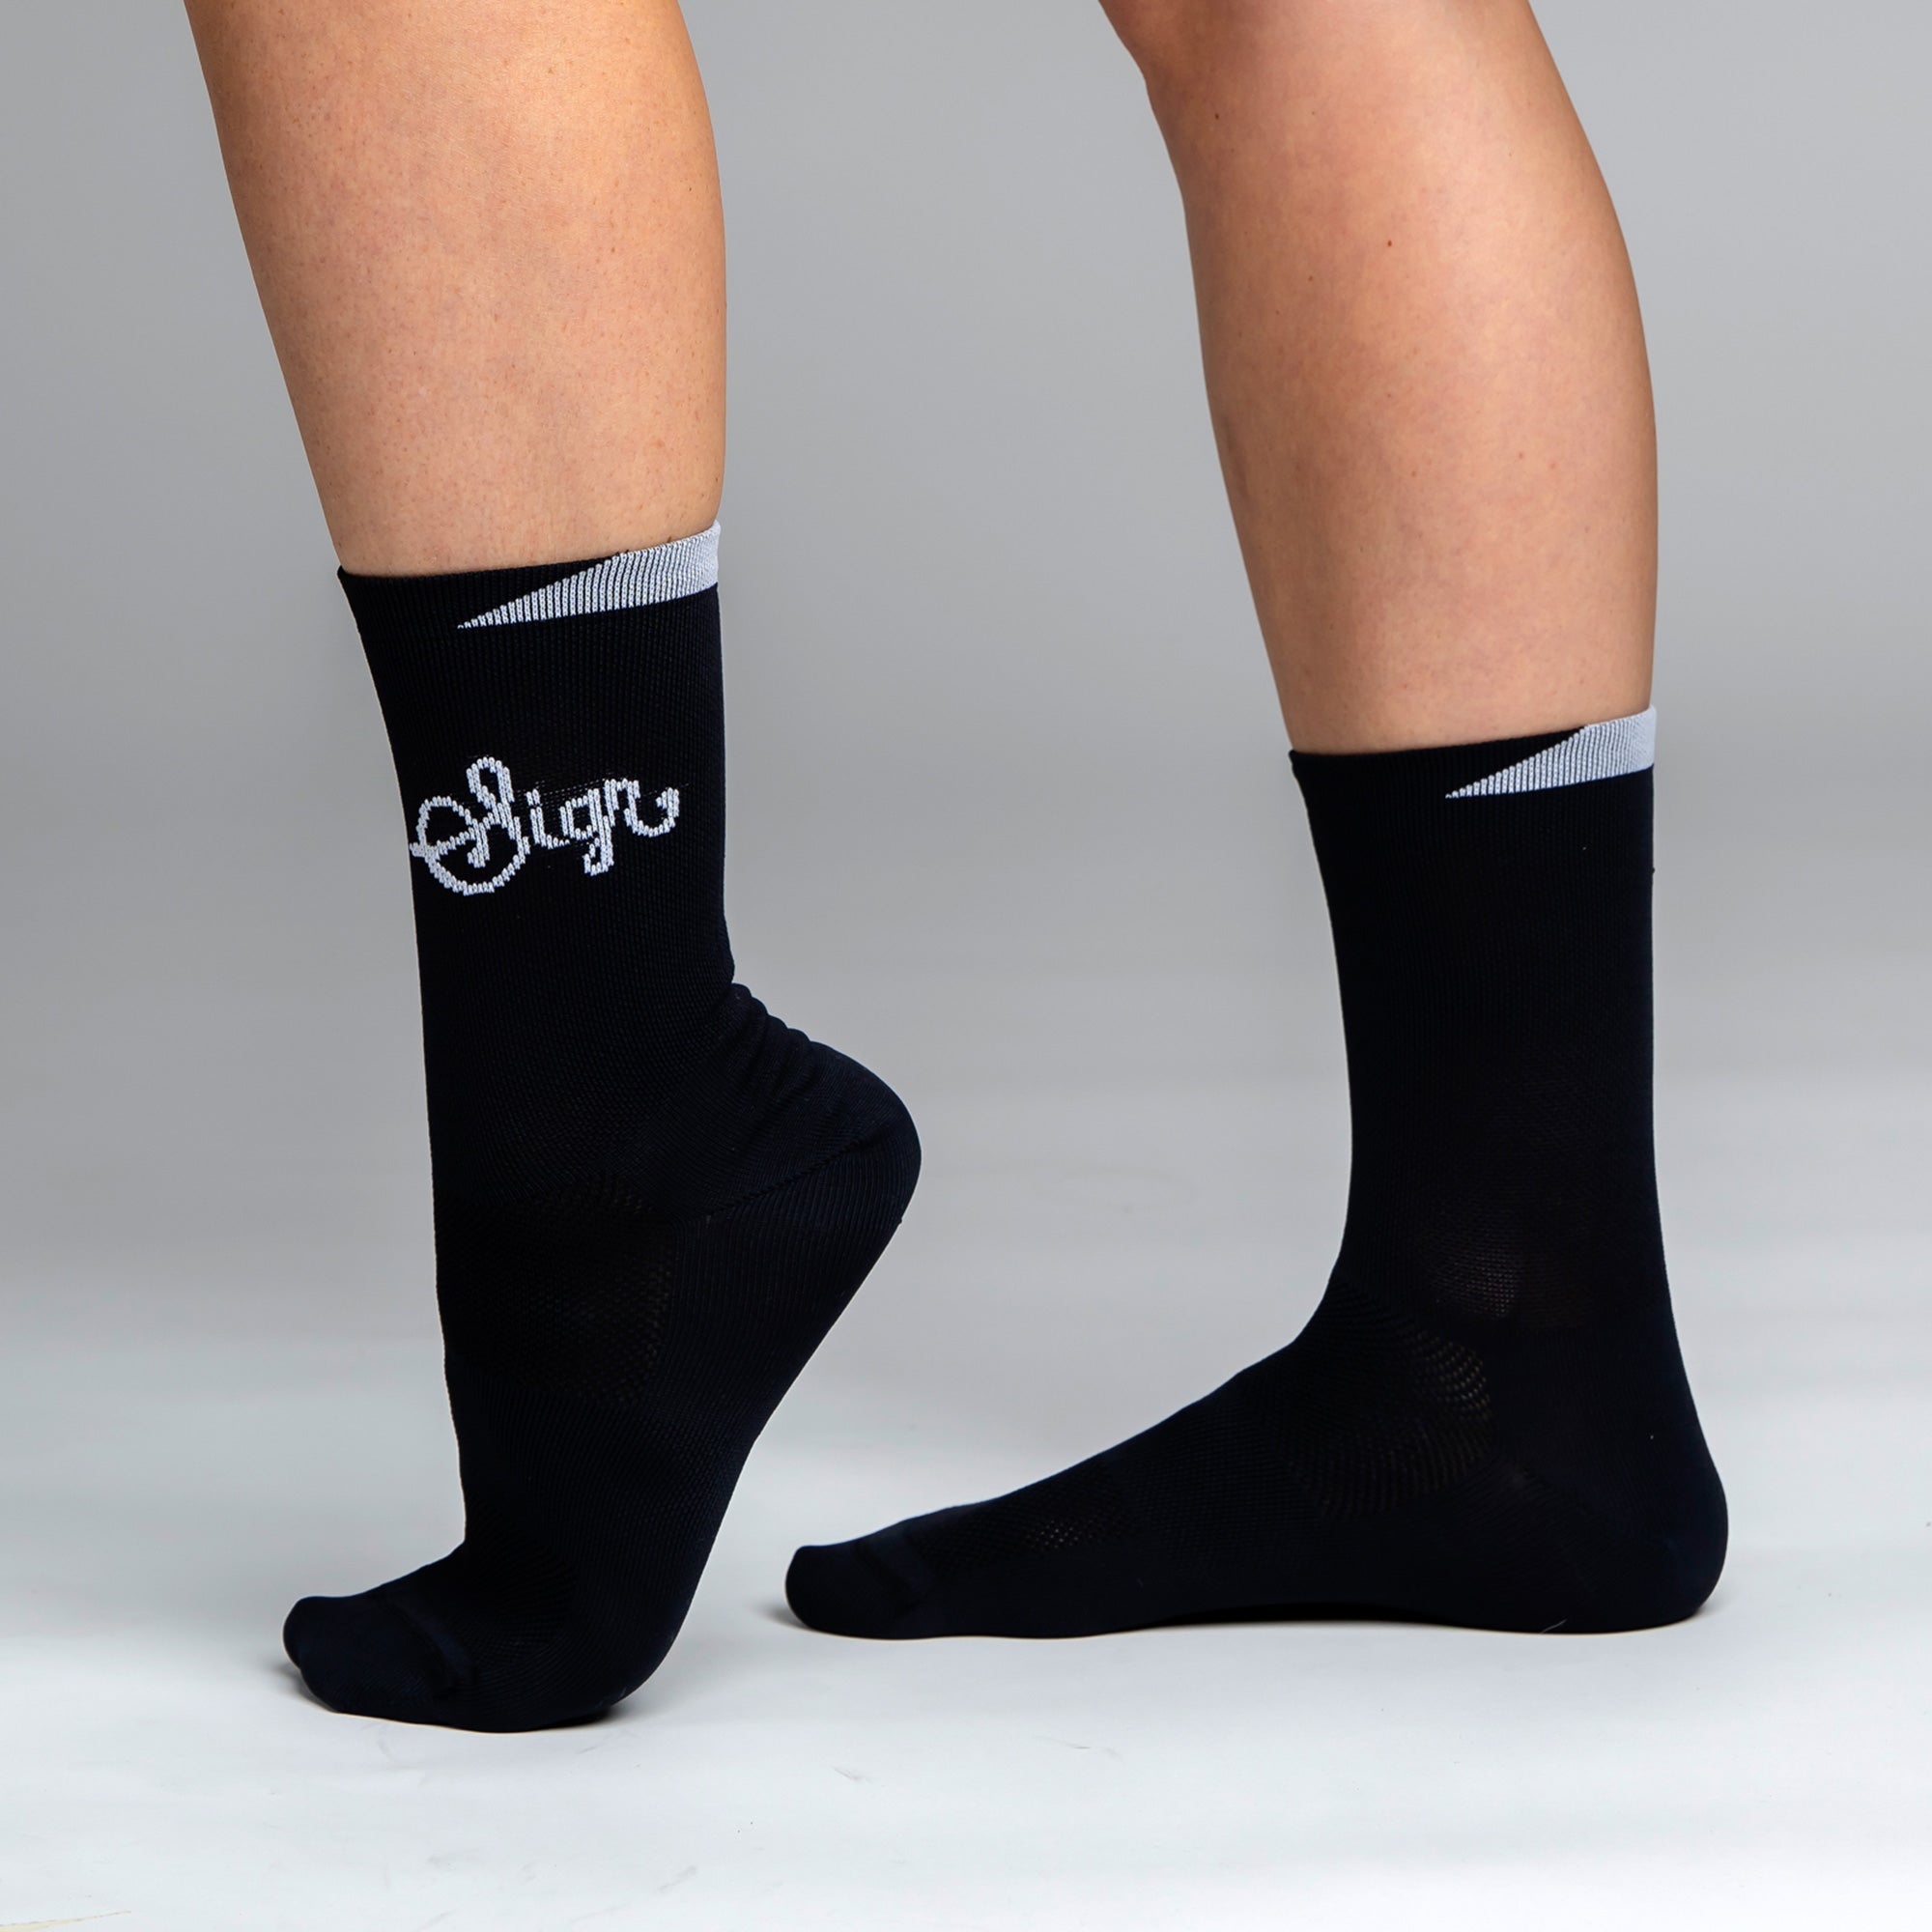 Snok - Black Road Cycling Socks for Women - Pack of 2 pairs